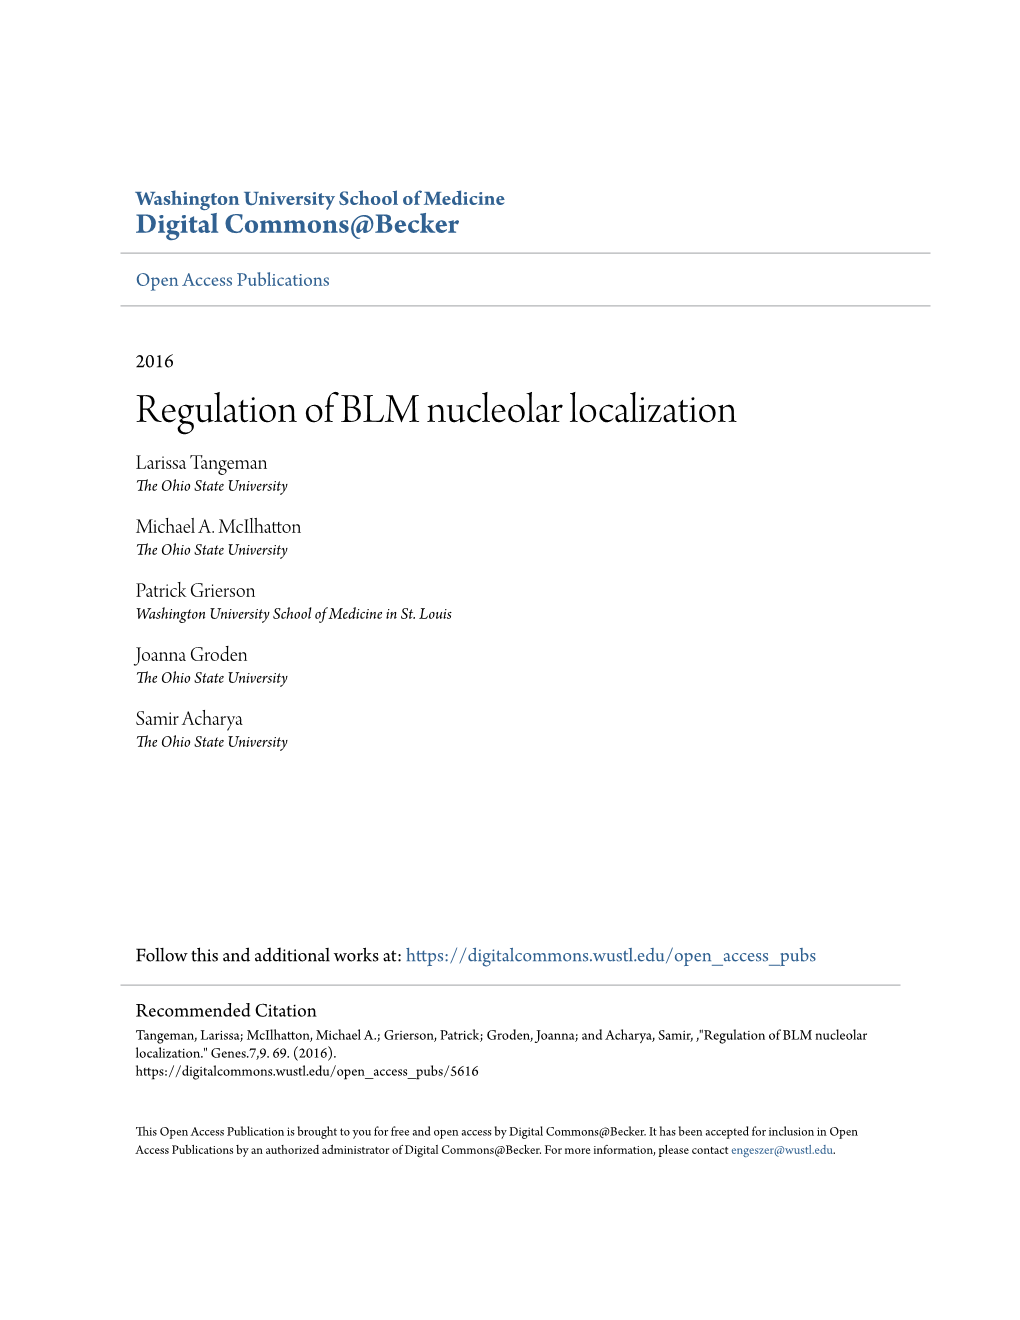 Regulation of BLM Nucleolar Localization Larissa Tangeman the Ohio State University